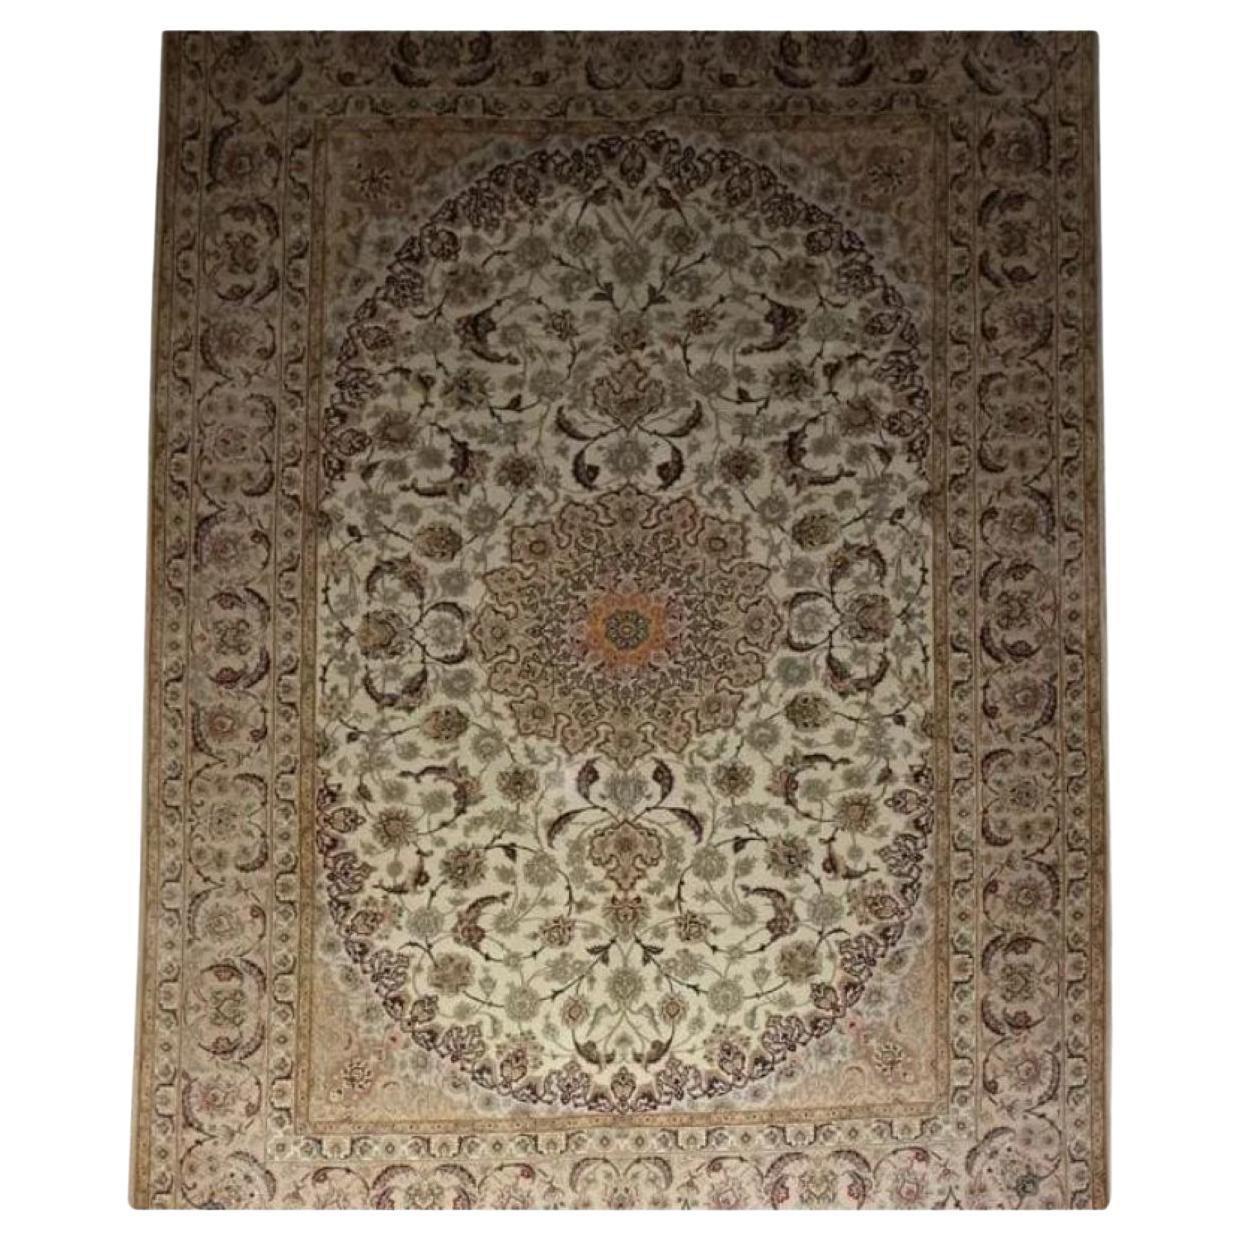 Very fine Persian Isfahan Silk & Wool Rug - 11.6' x 8.4'